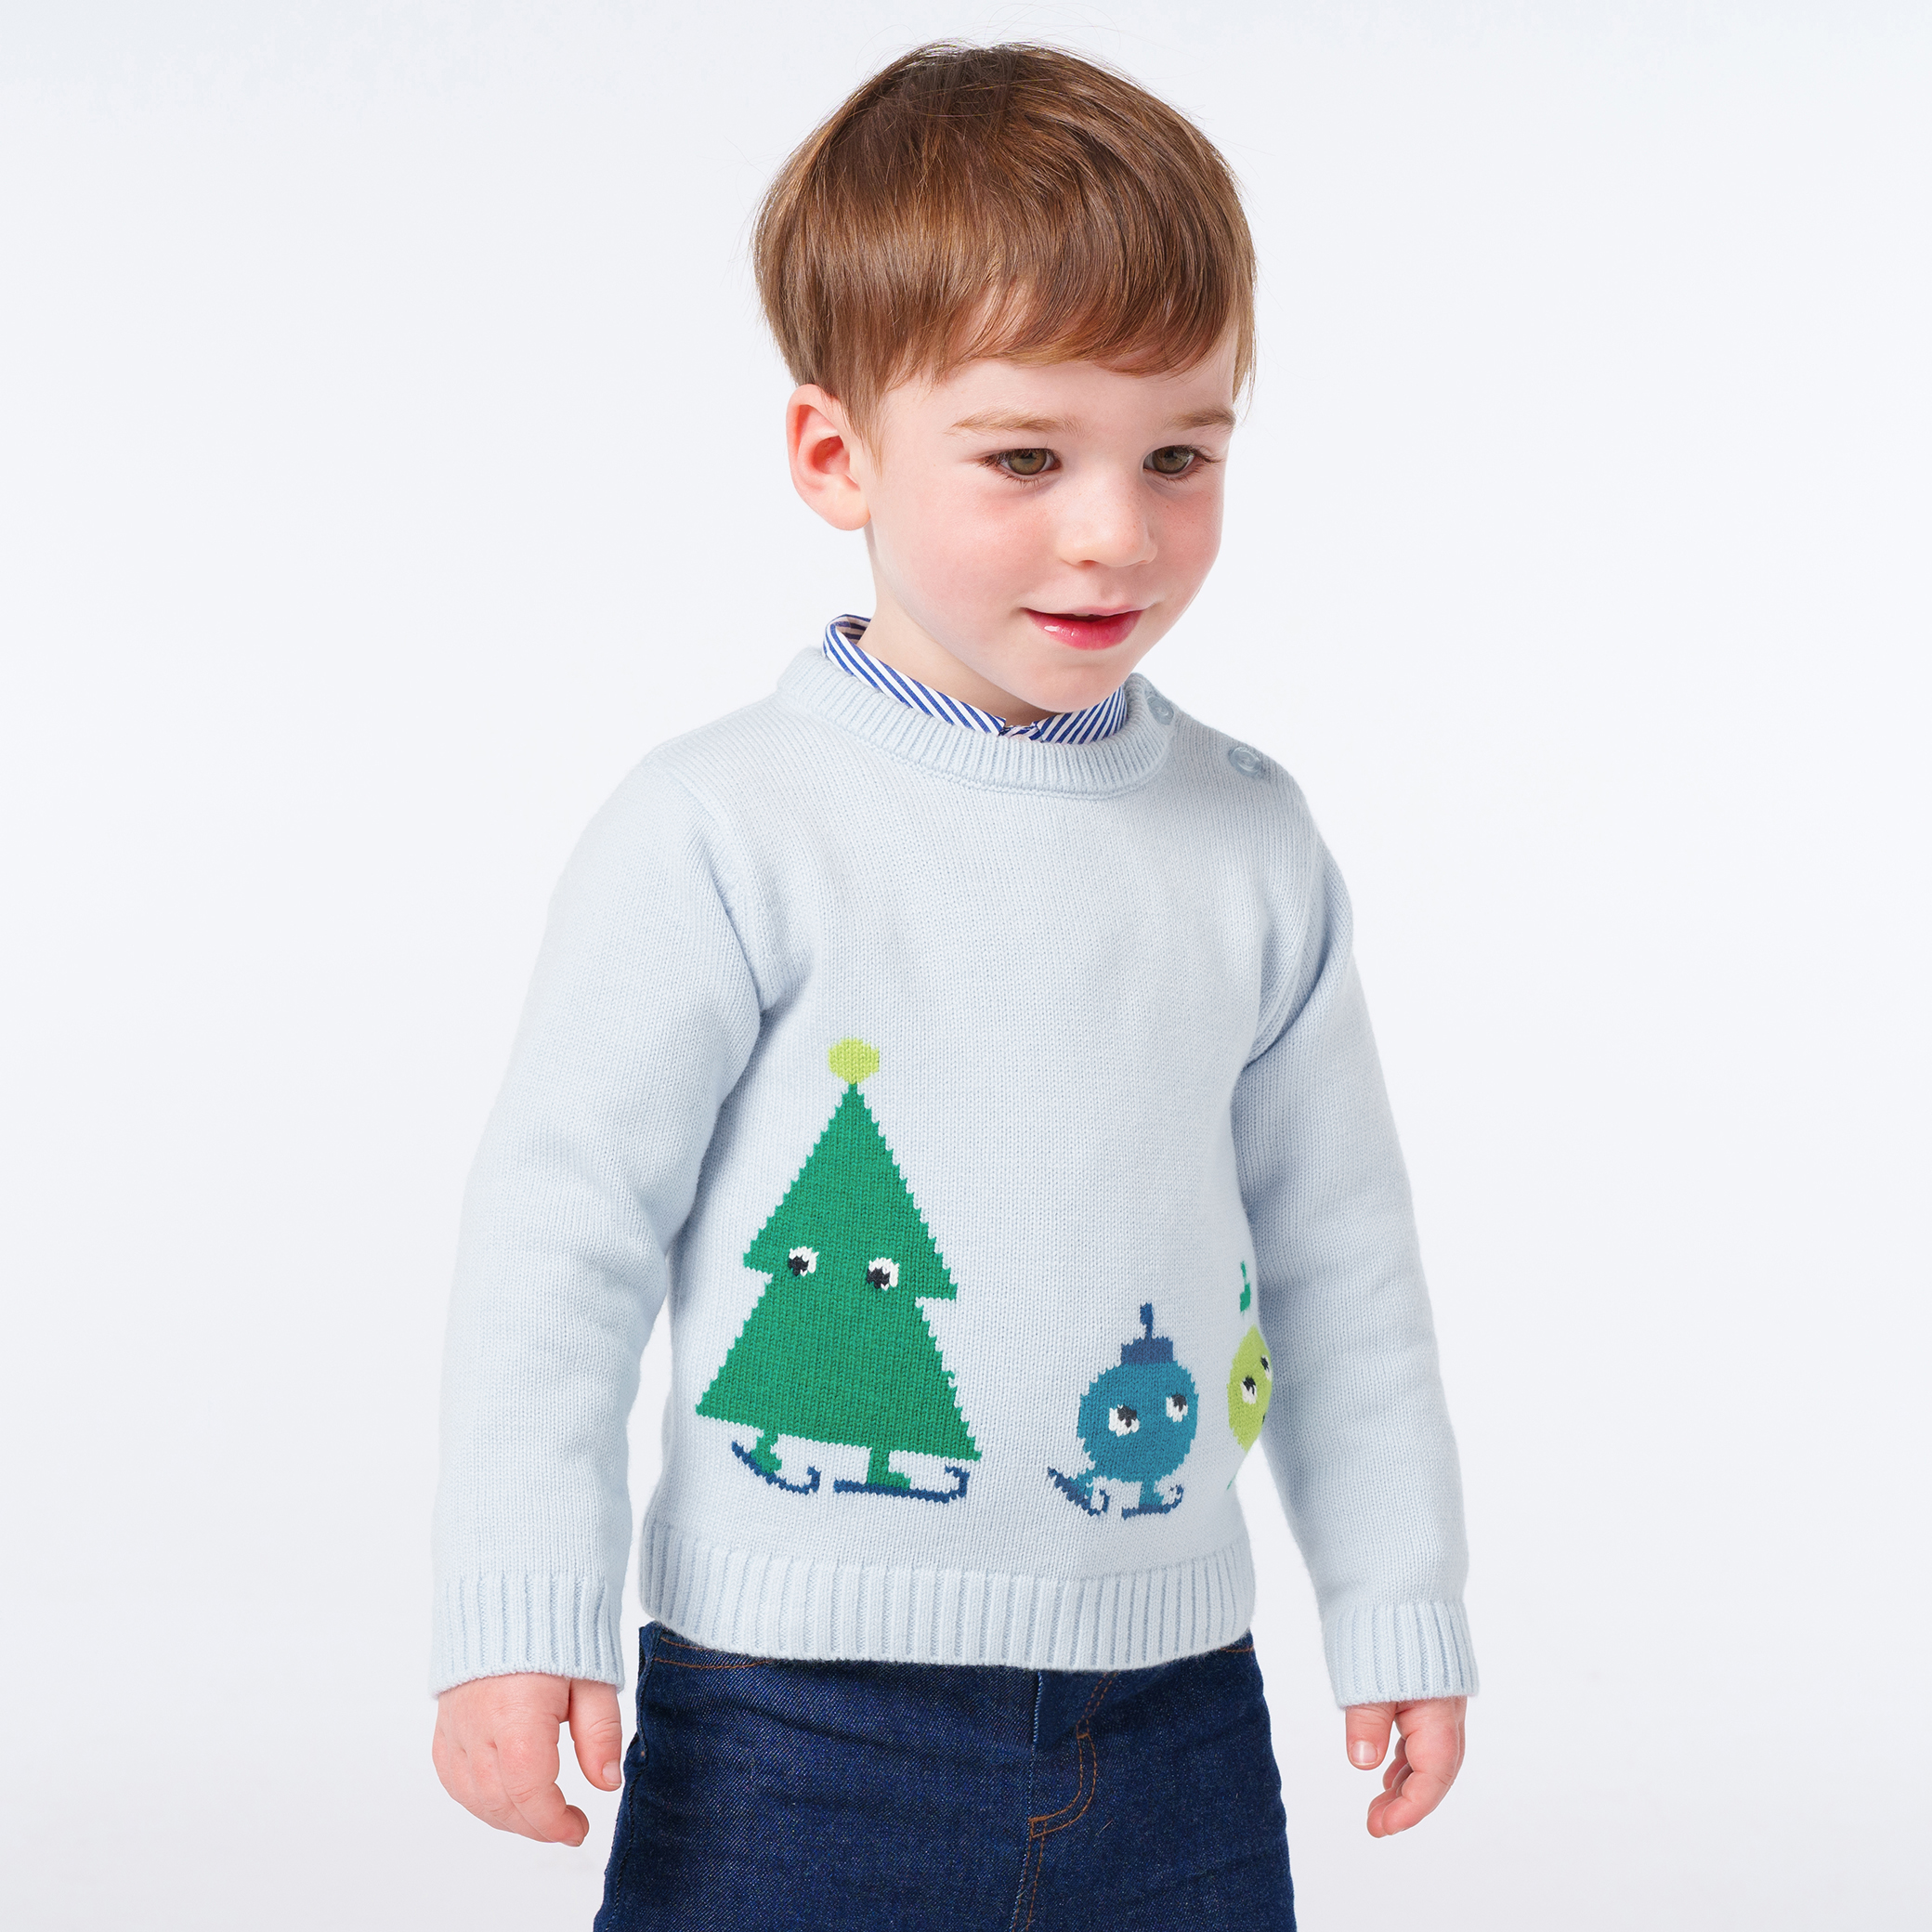 Baby boy sweater with fir tree Intarsia